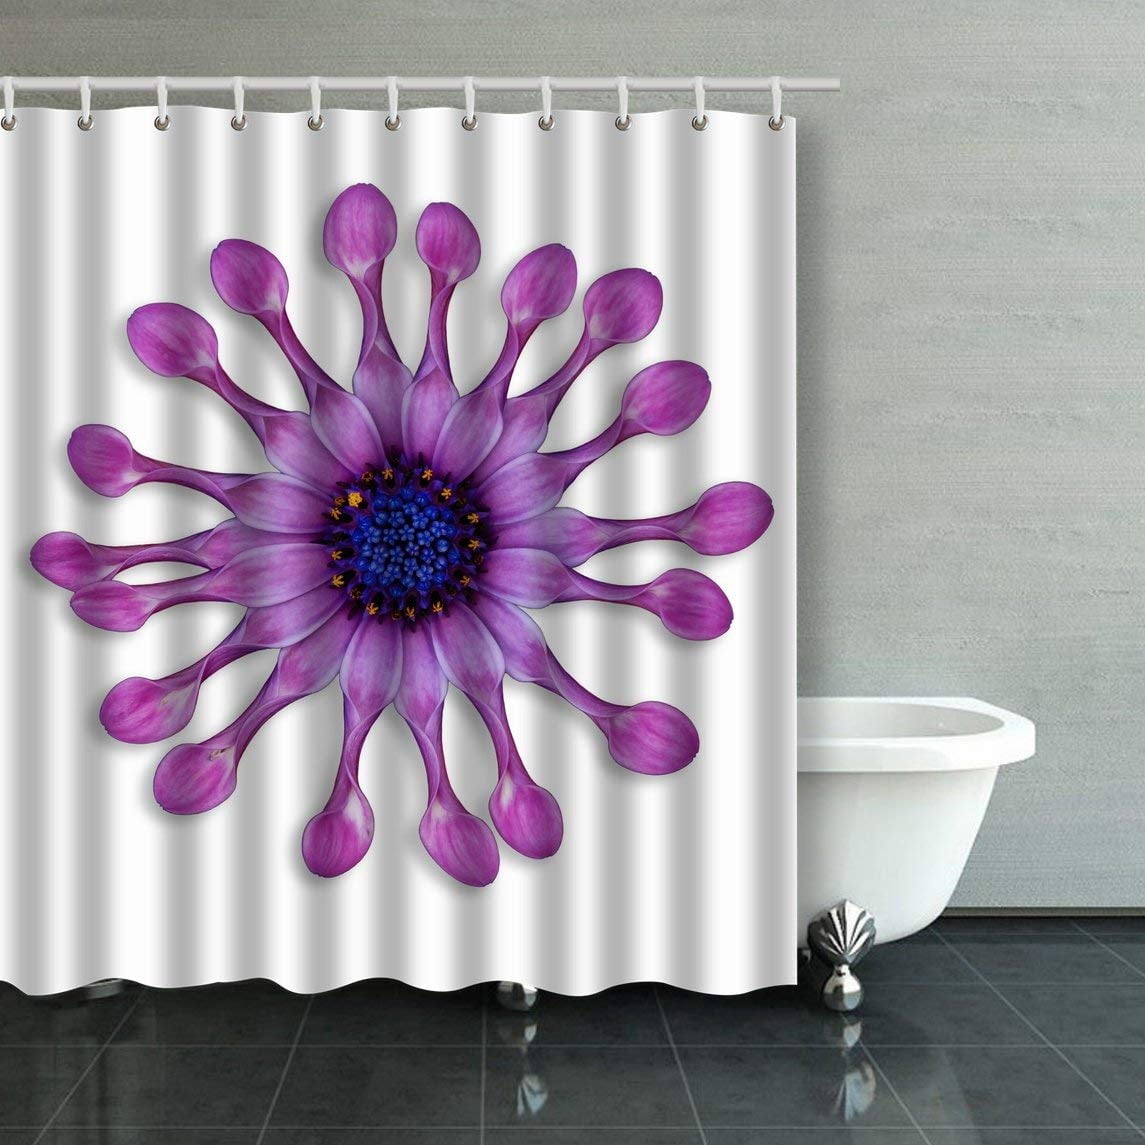 BPBOP Soprano Lilac Spoon Flower African Daisy Shower Curtain Bathroom ...